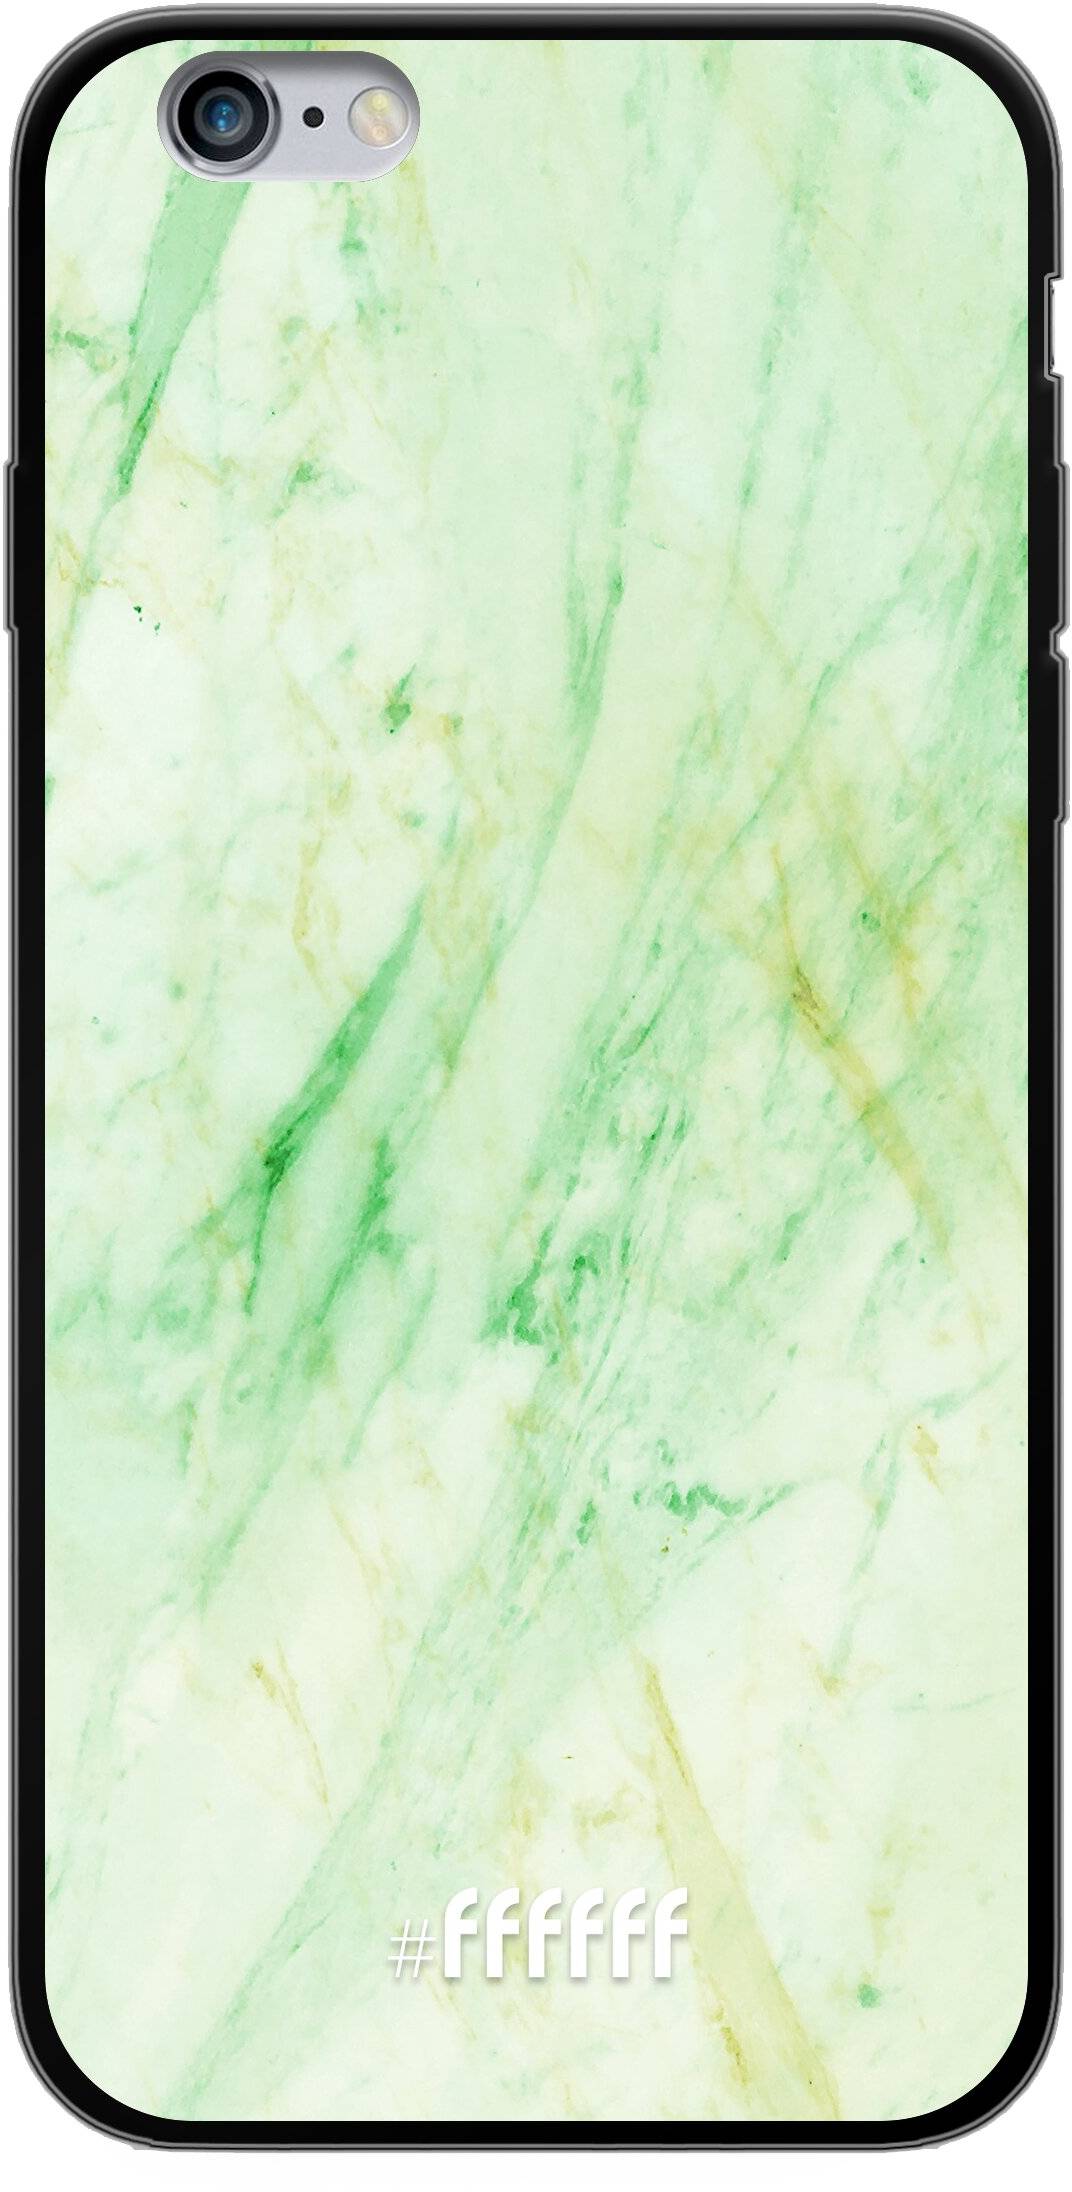 Pistachio Marble iPhone 6s